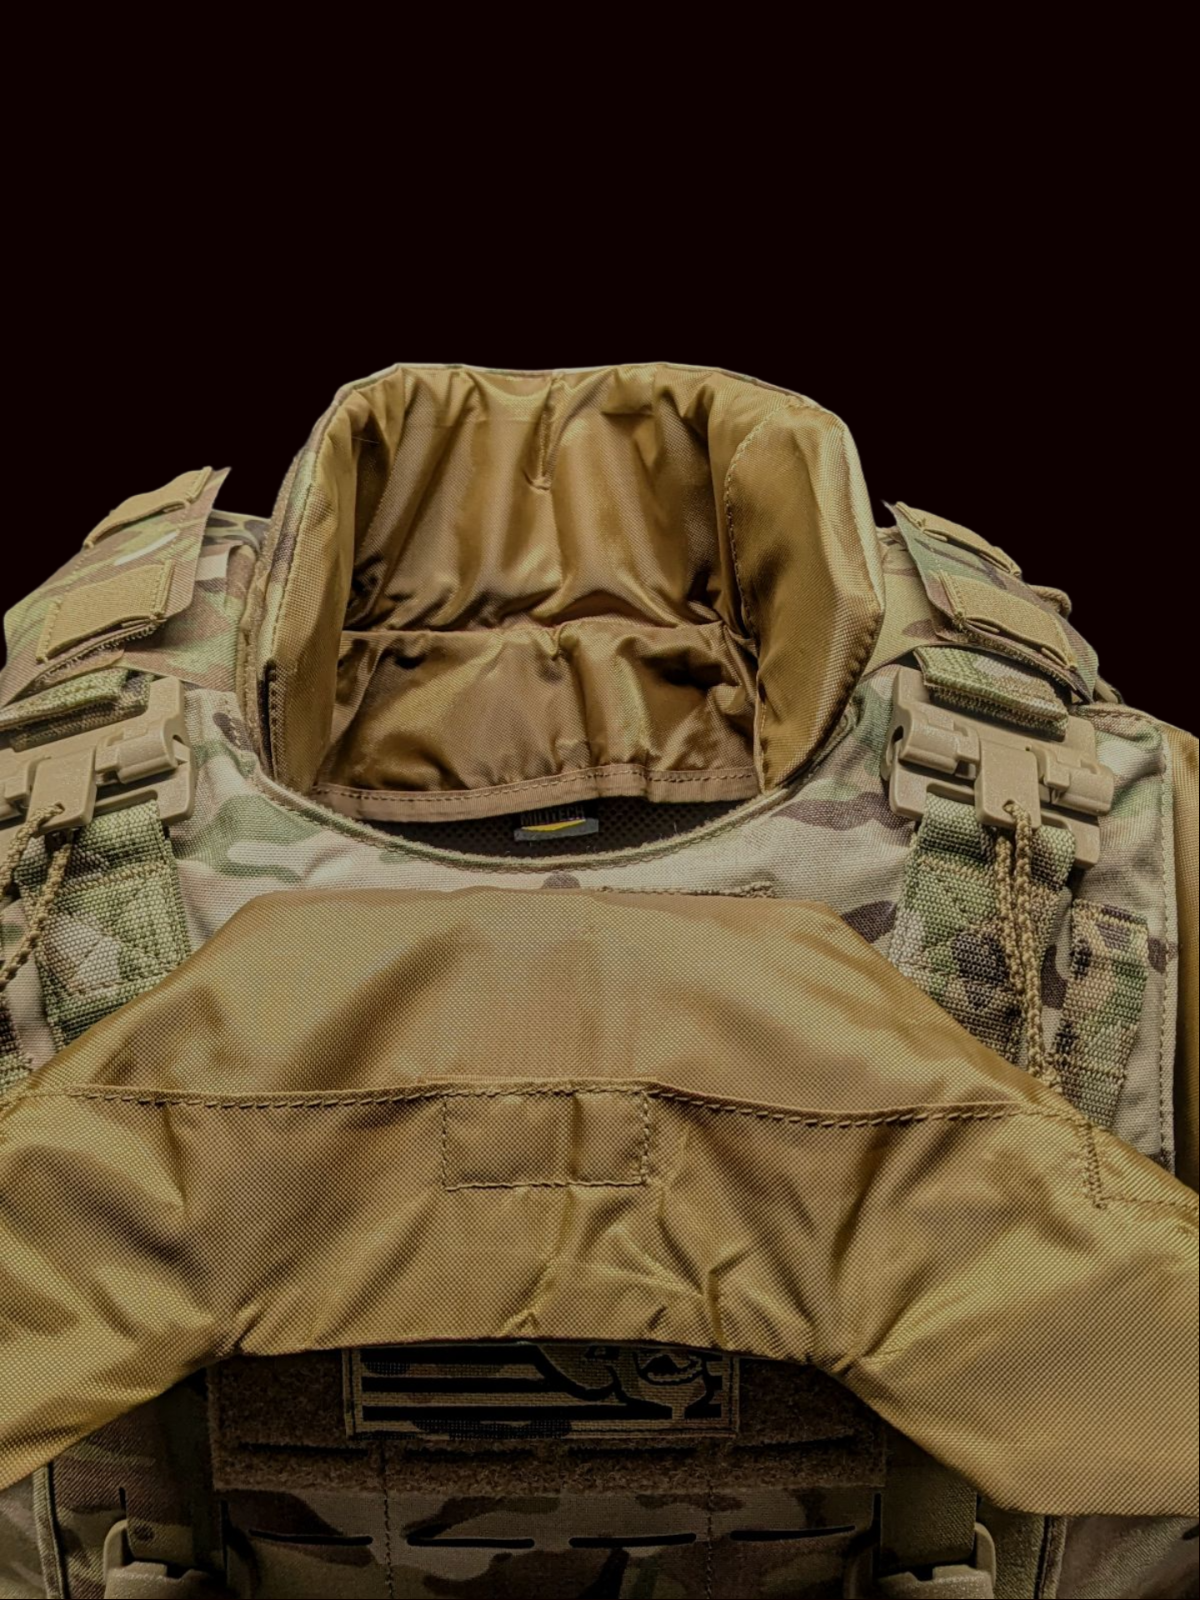 Militech Throat and Neck Armor for Battle Carrier Vest